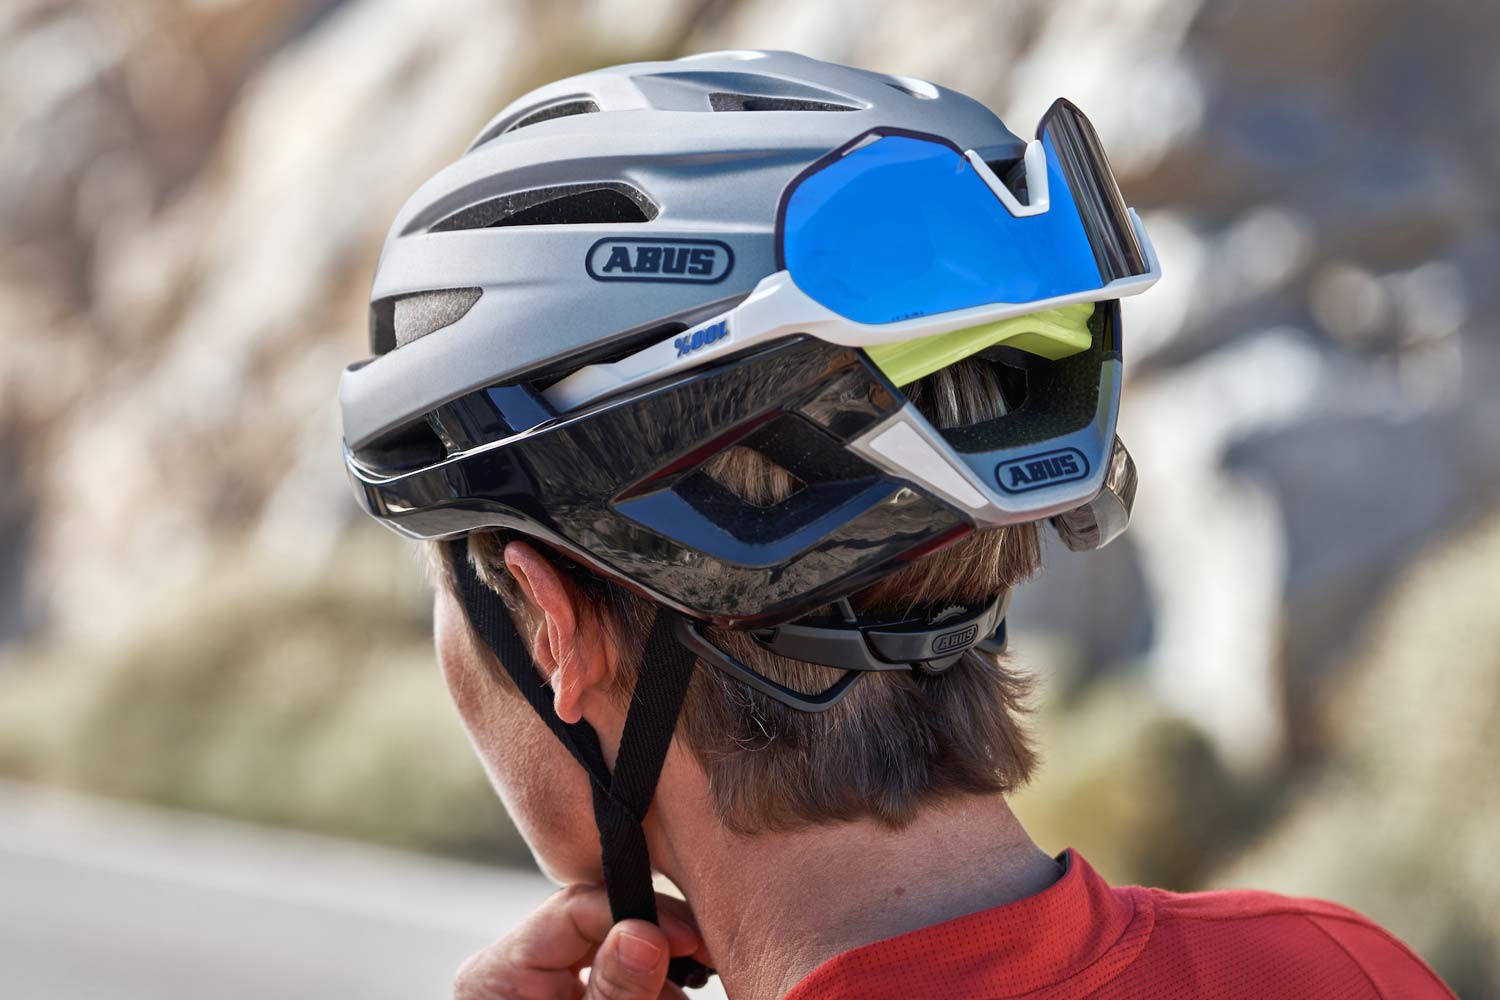 Abus StormChaser affordable aero road helmet